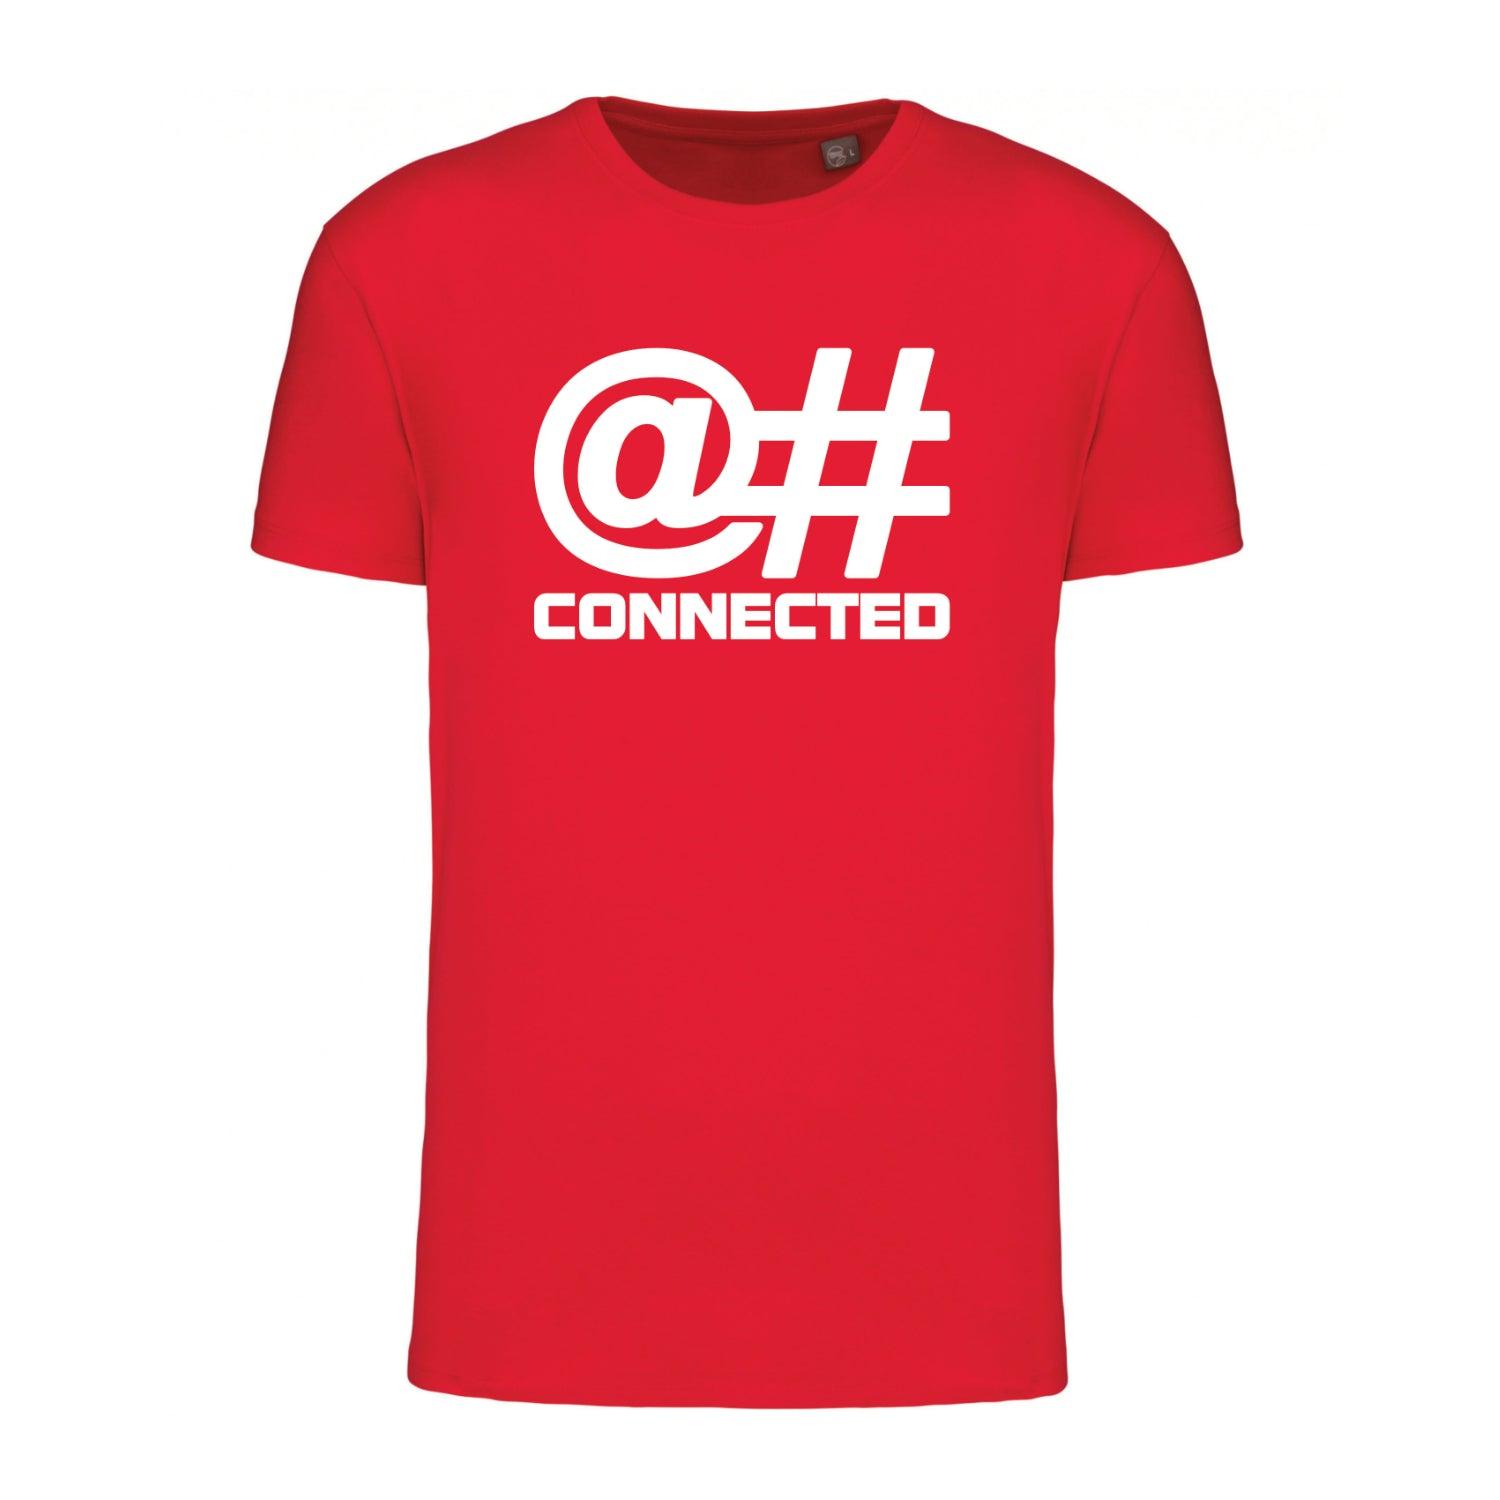 Tee-shirt unisexe rouge CONNECTED 100% coton biologique & vegan - CONNECTED Streetwear